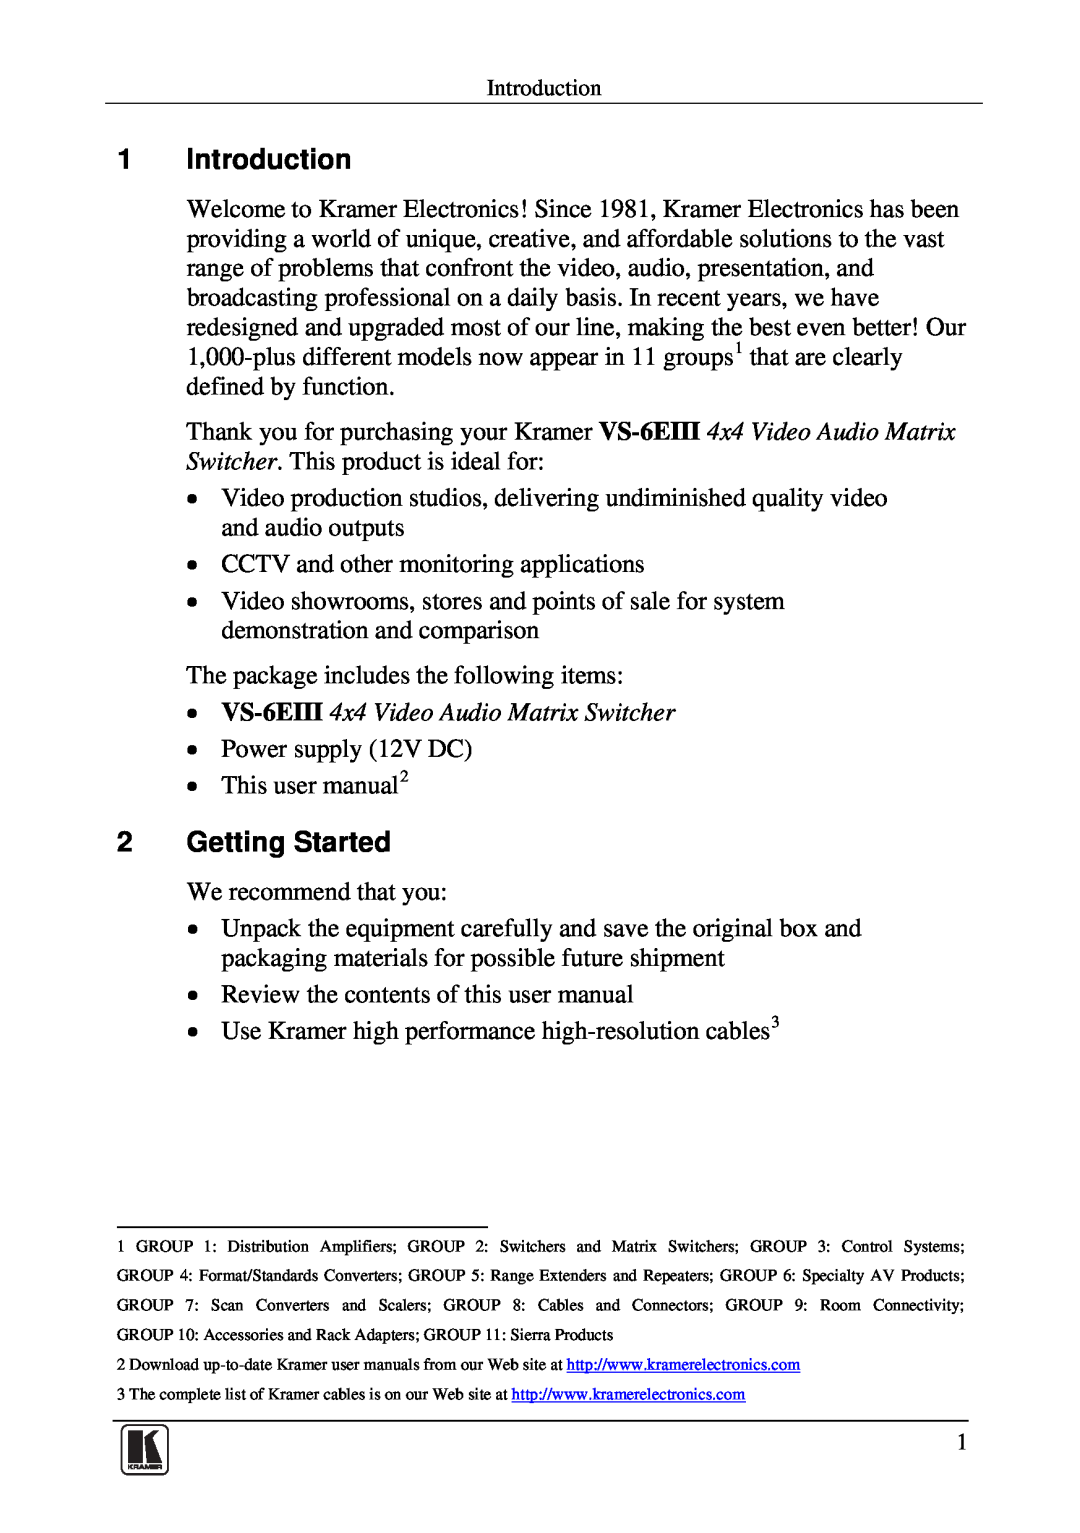 Kramer Electronics VS-6EIII user manual Introduction, Getting Started 